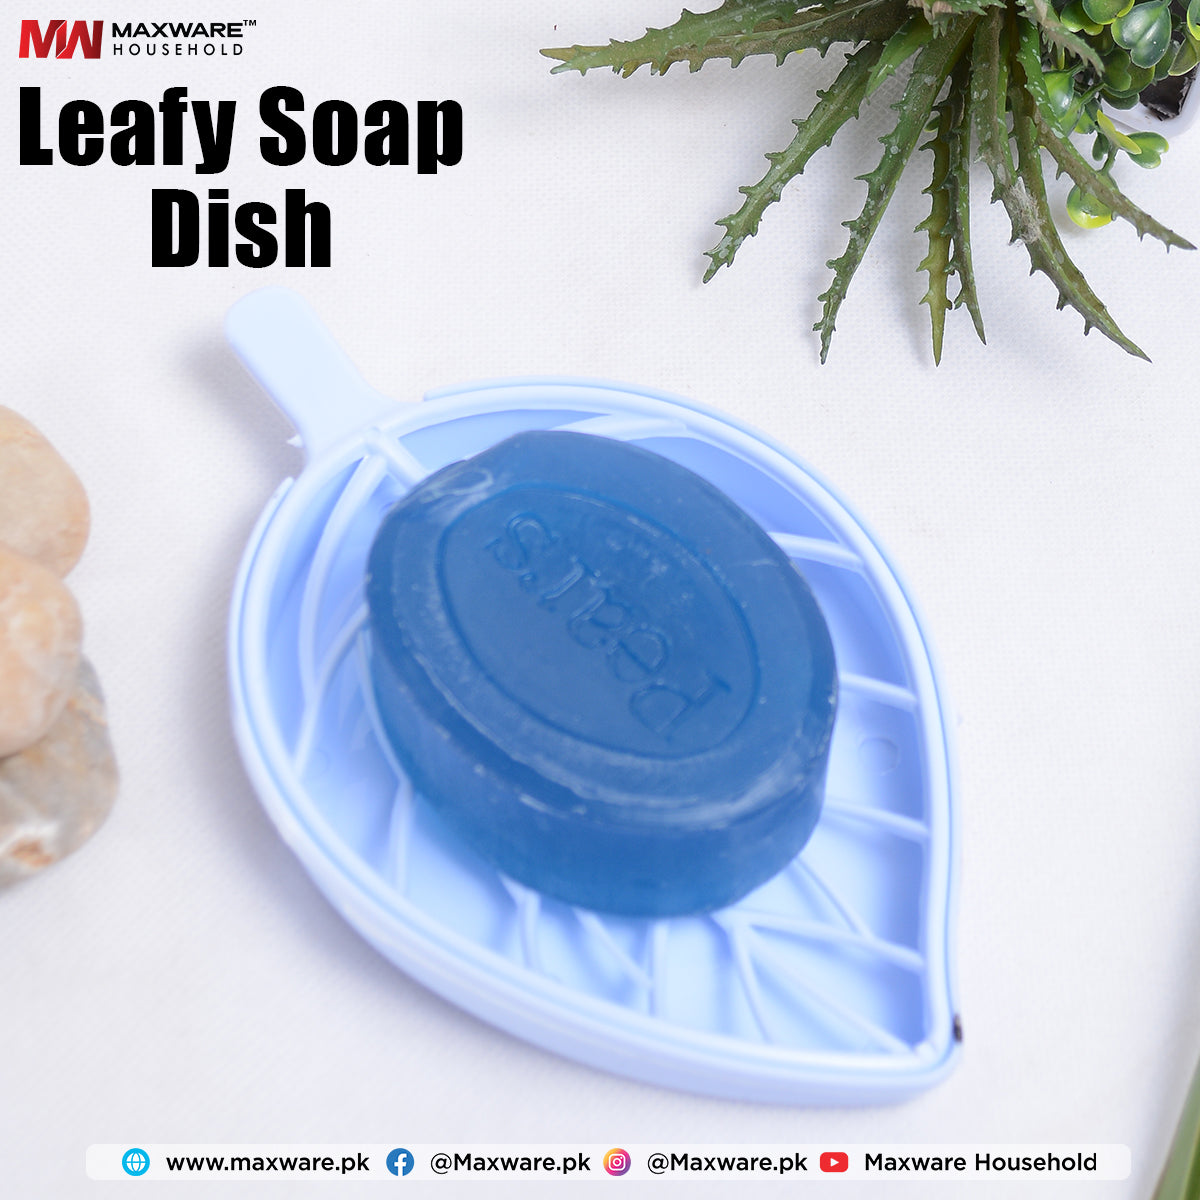 Leafy Soap Dish - Maxwaremart